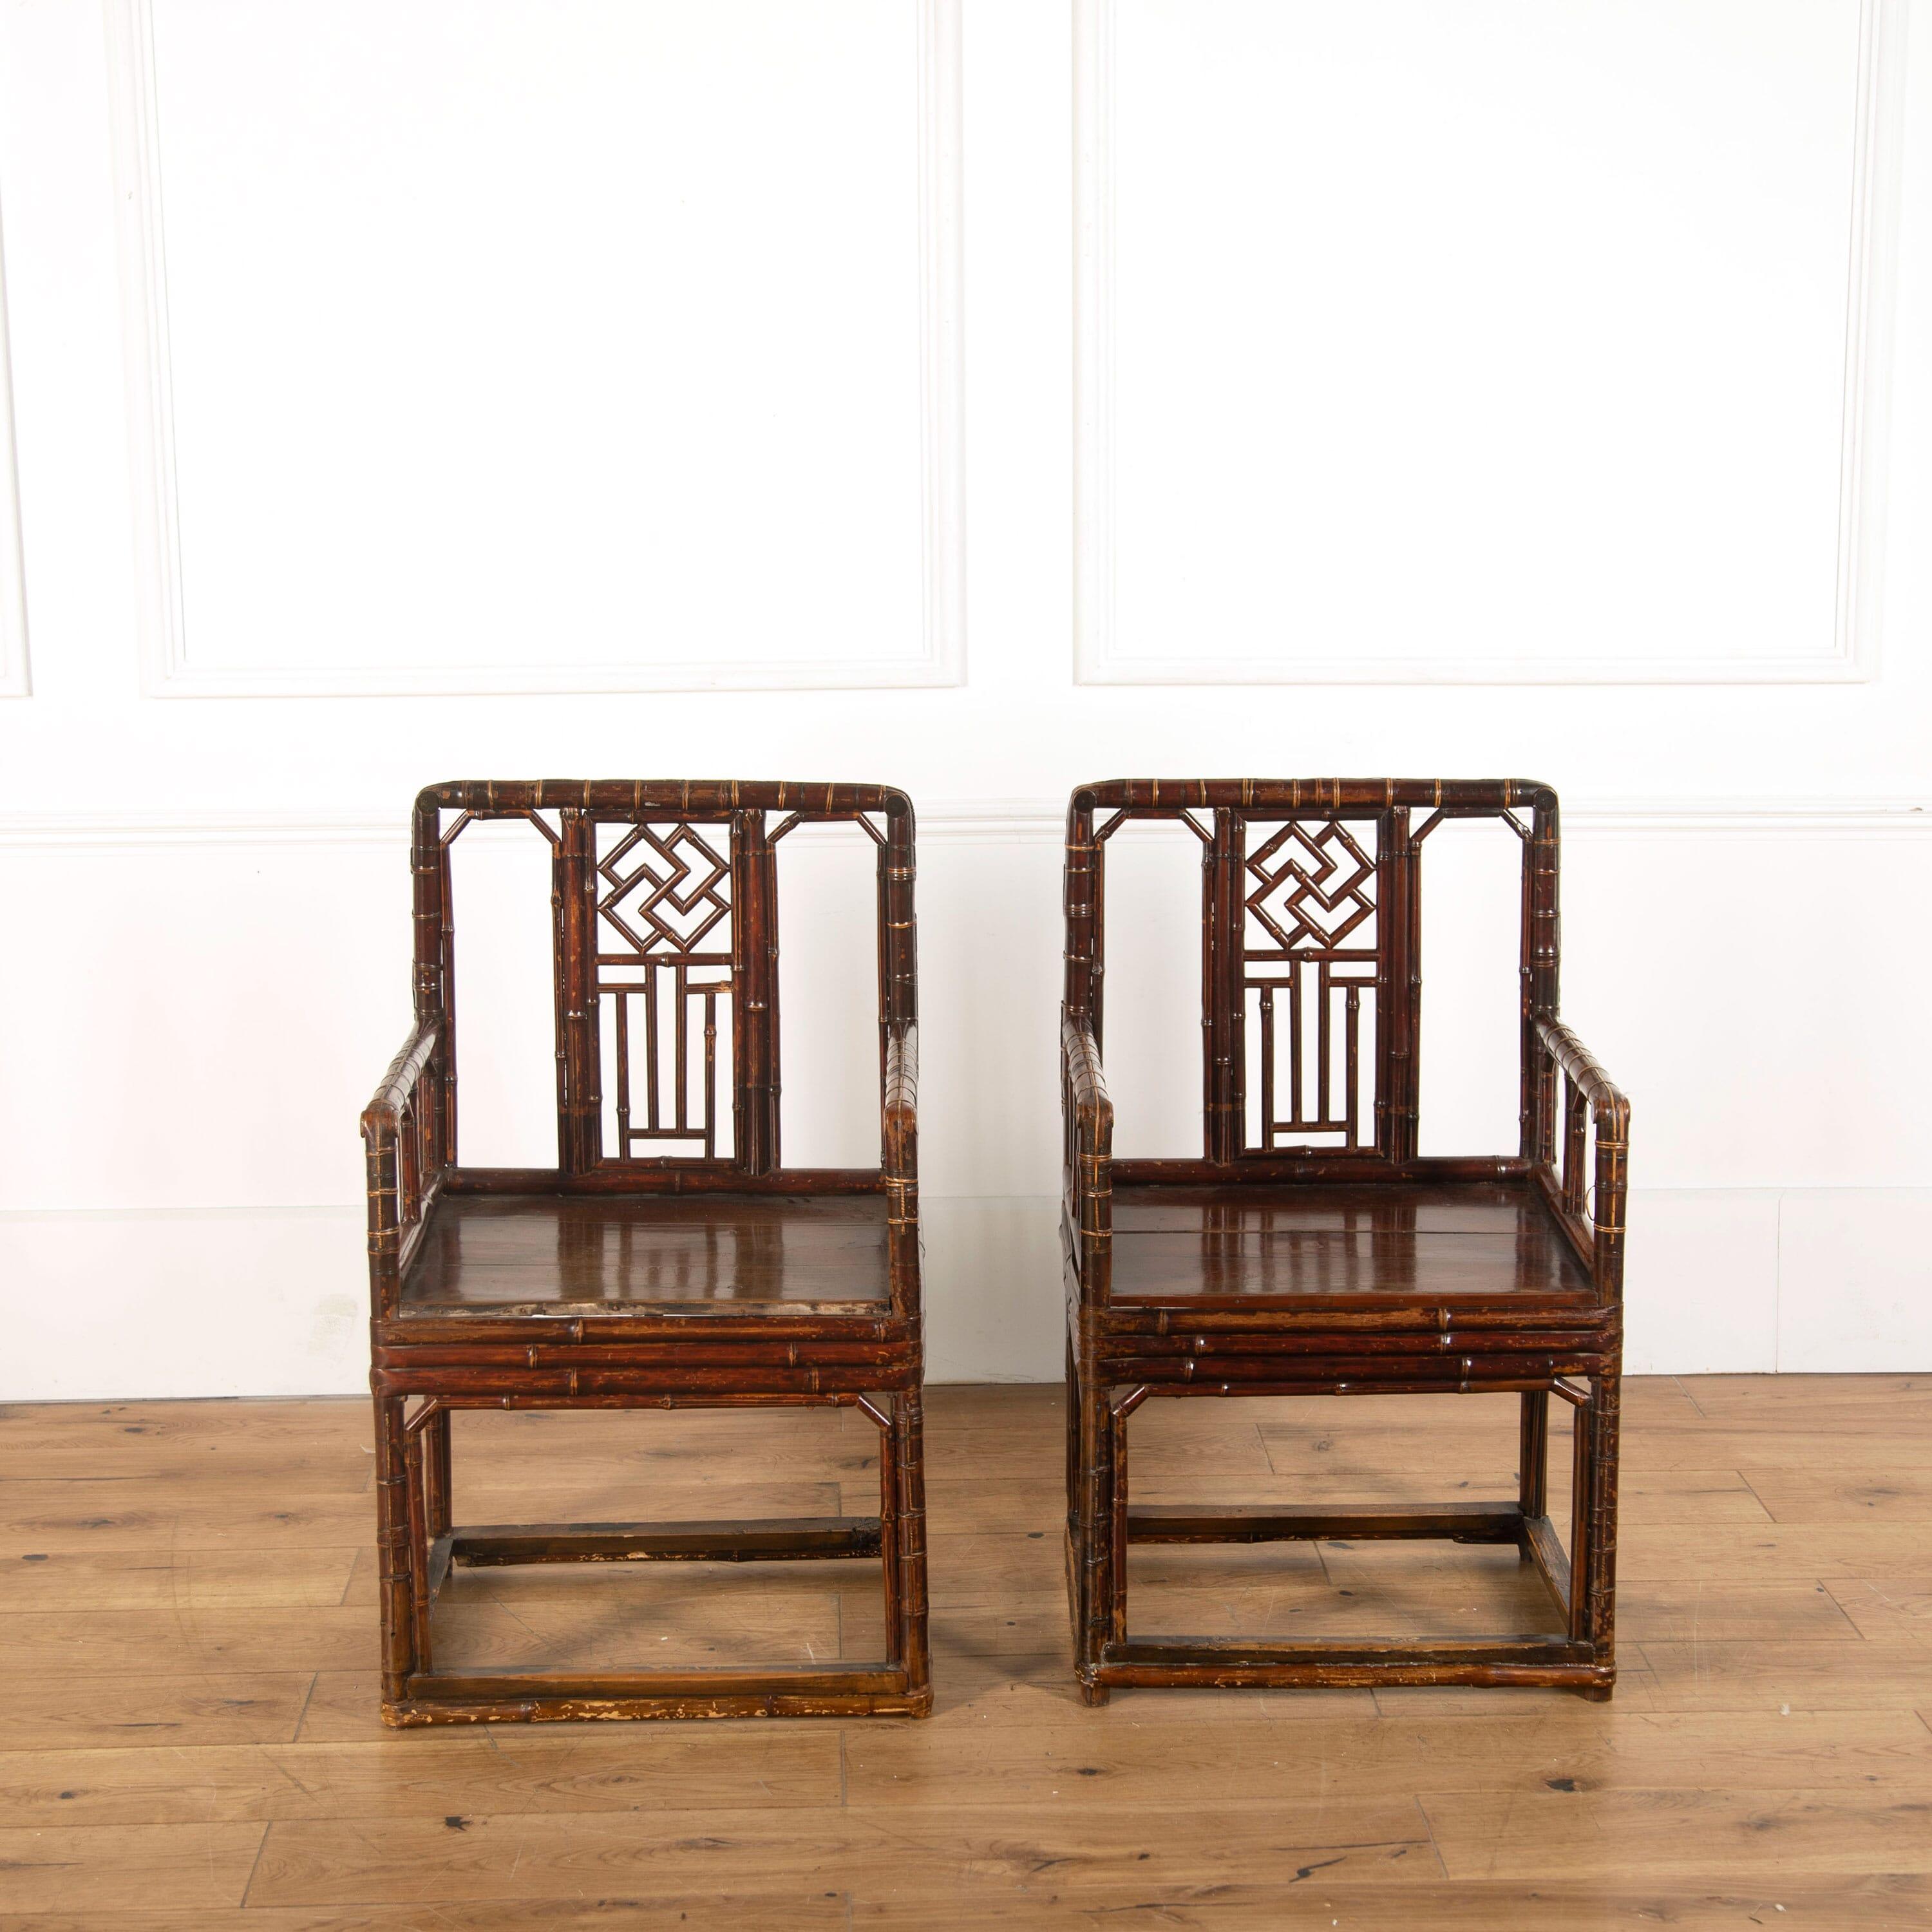 Pair of 19th century Chinese Brighton Pavillion style bamboo chairs.